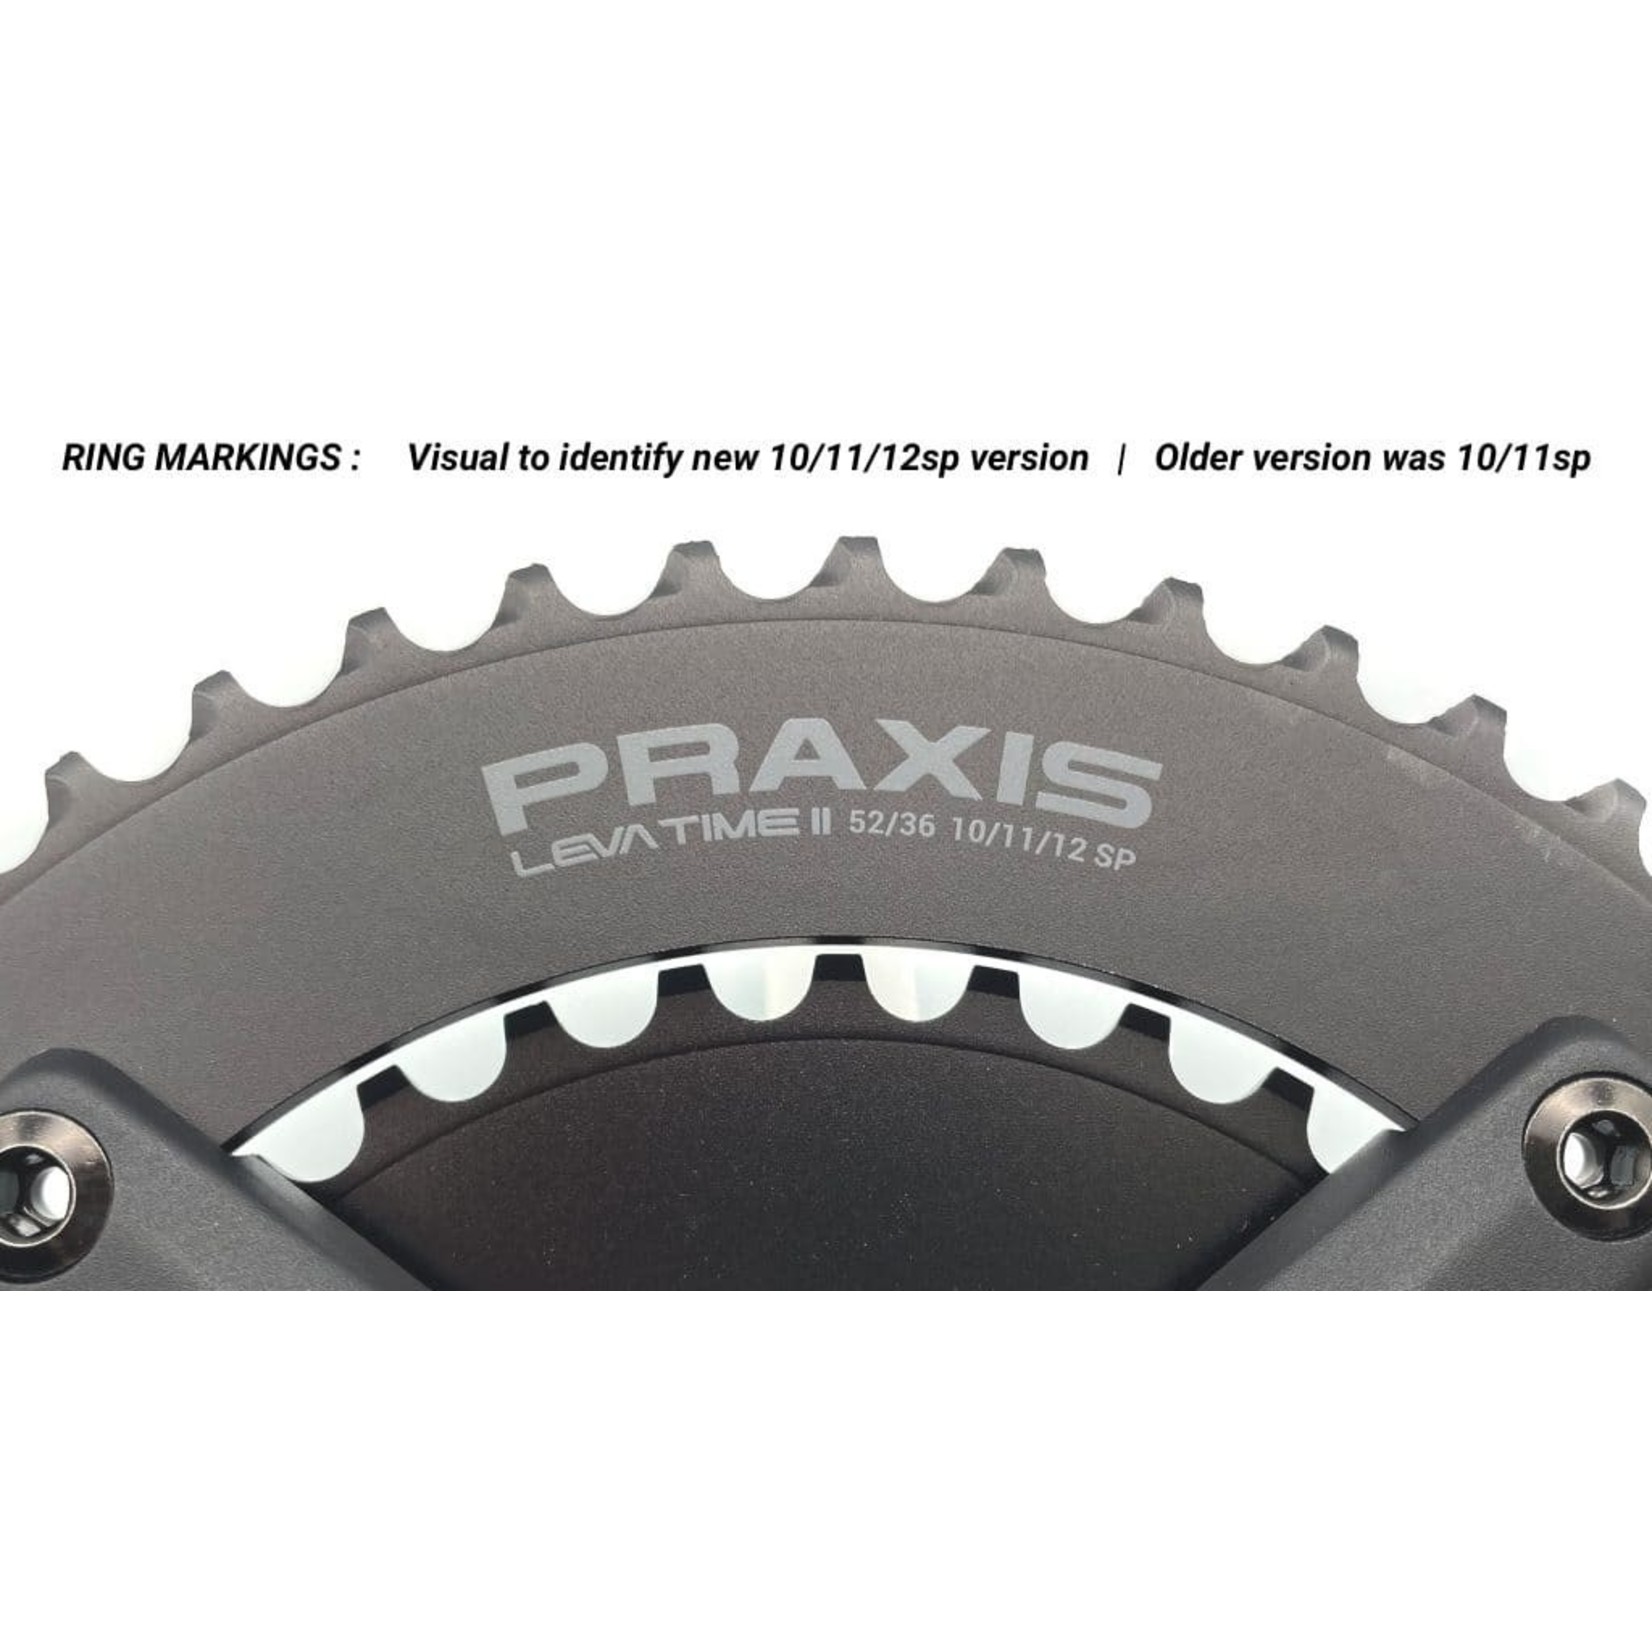 Praxis Praxis Road cranks - Alba - Alloy,172.5mm 52/36